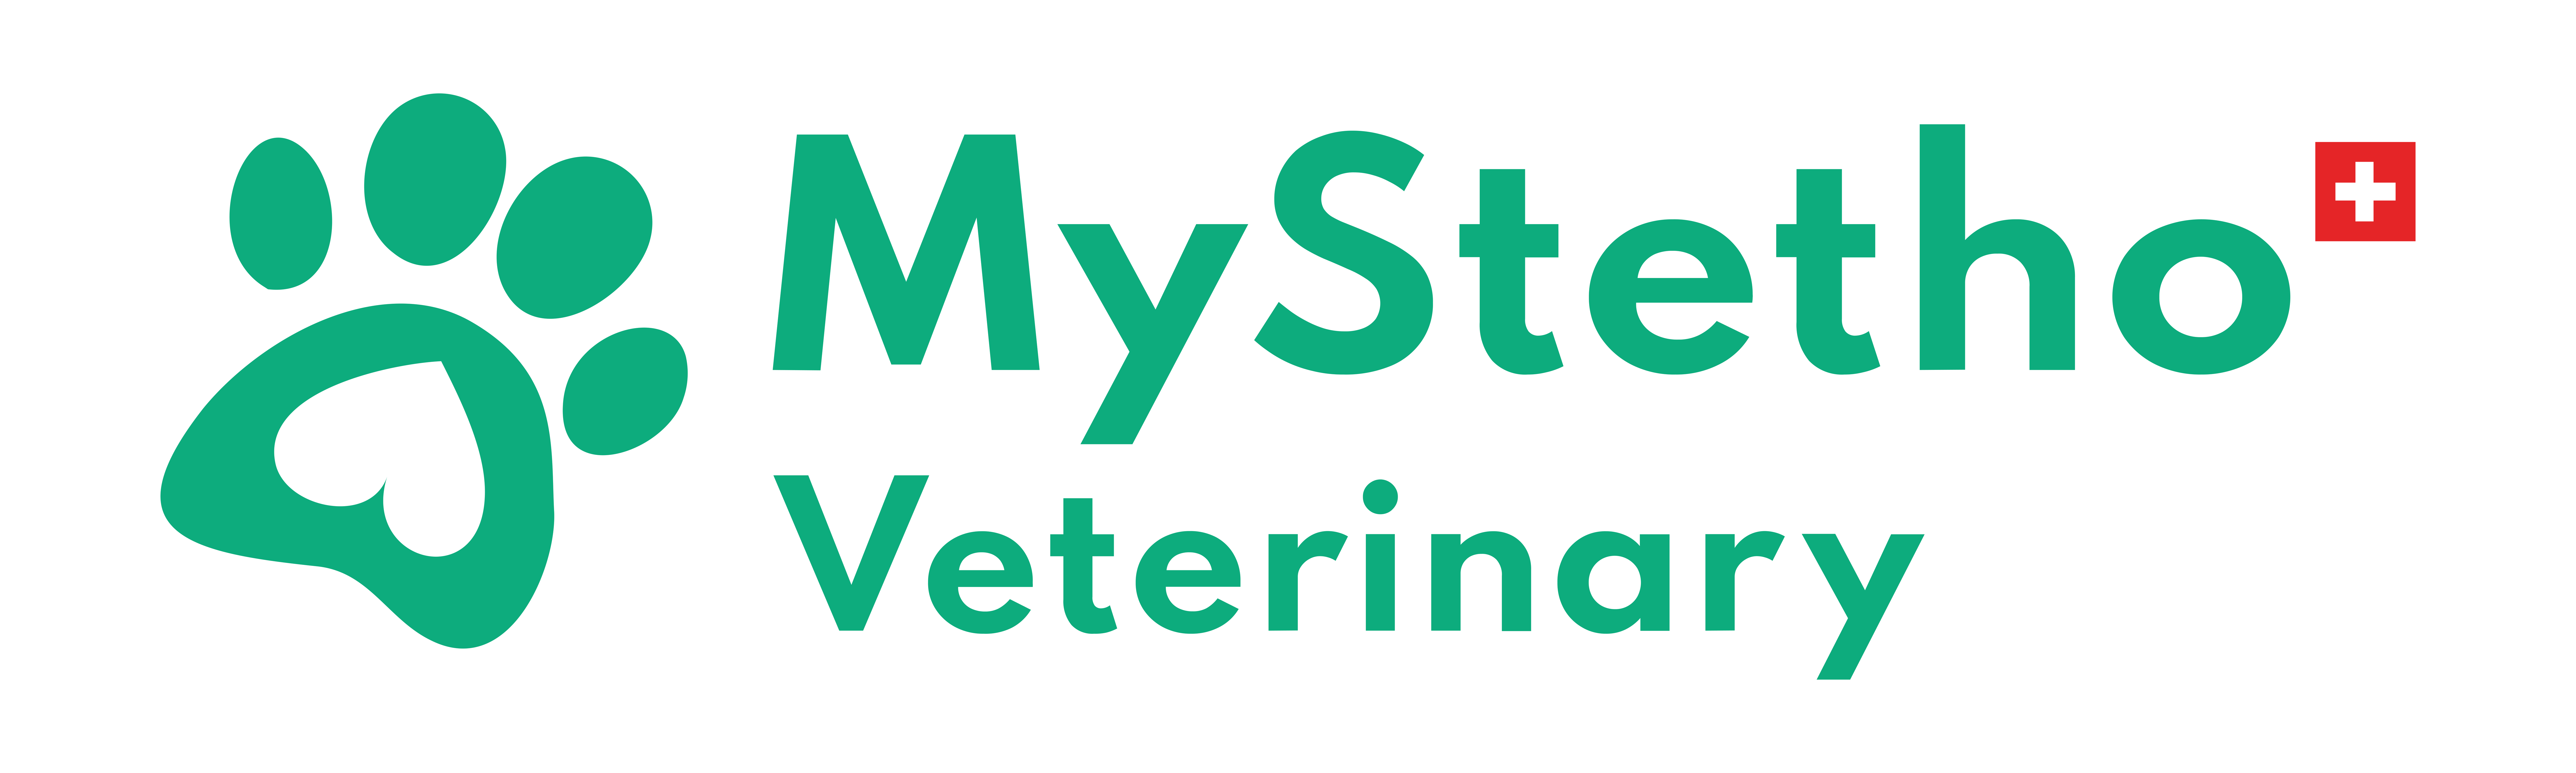 Cabinet vétérinaire MyStetho Veterinary logo